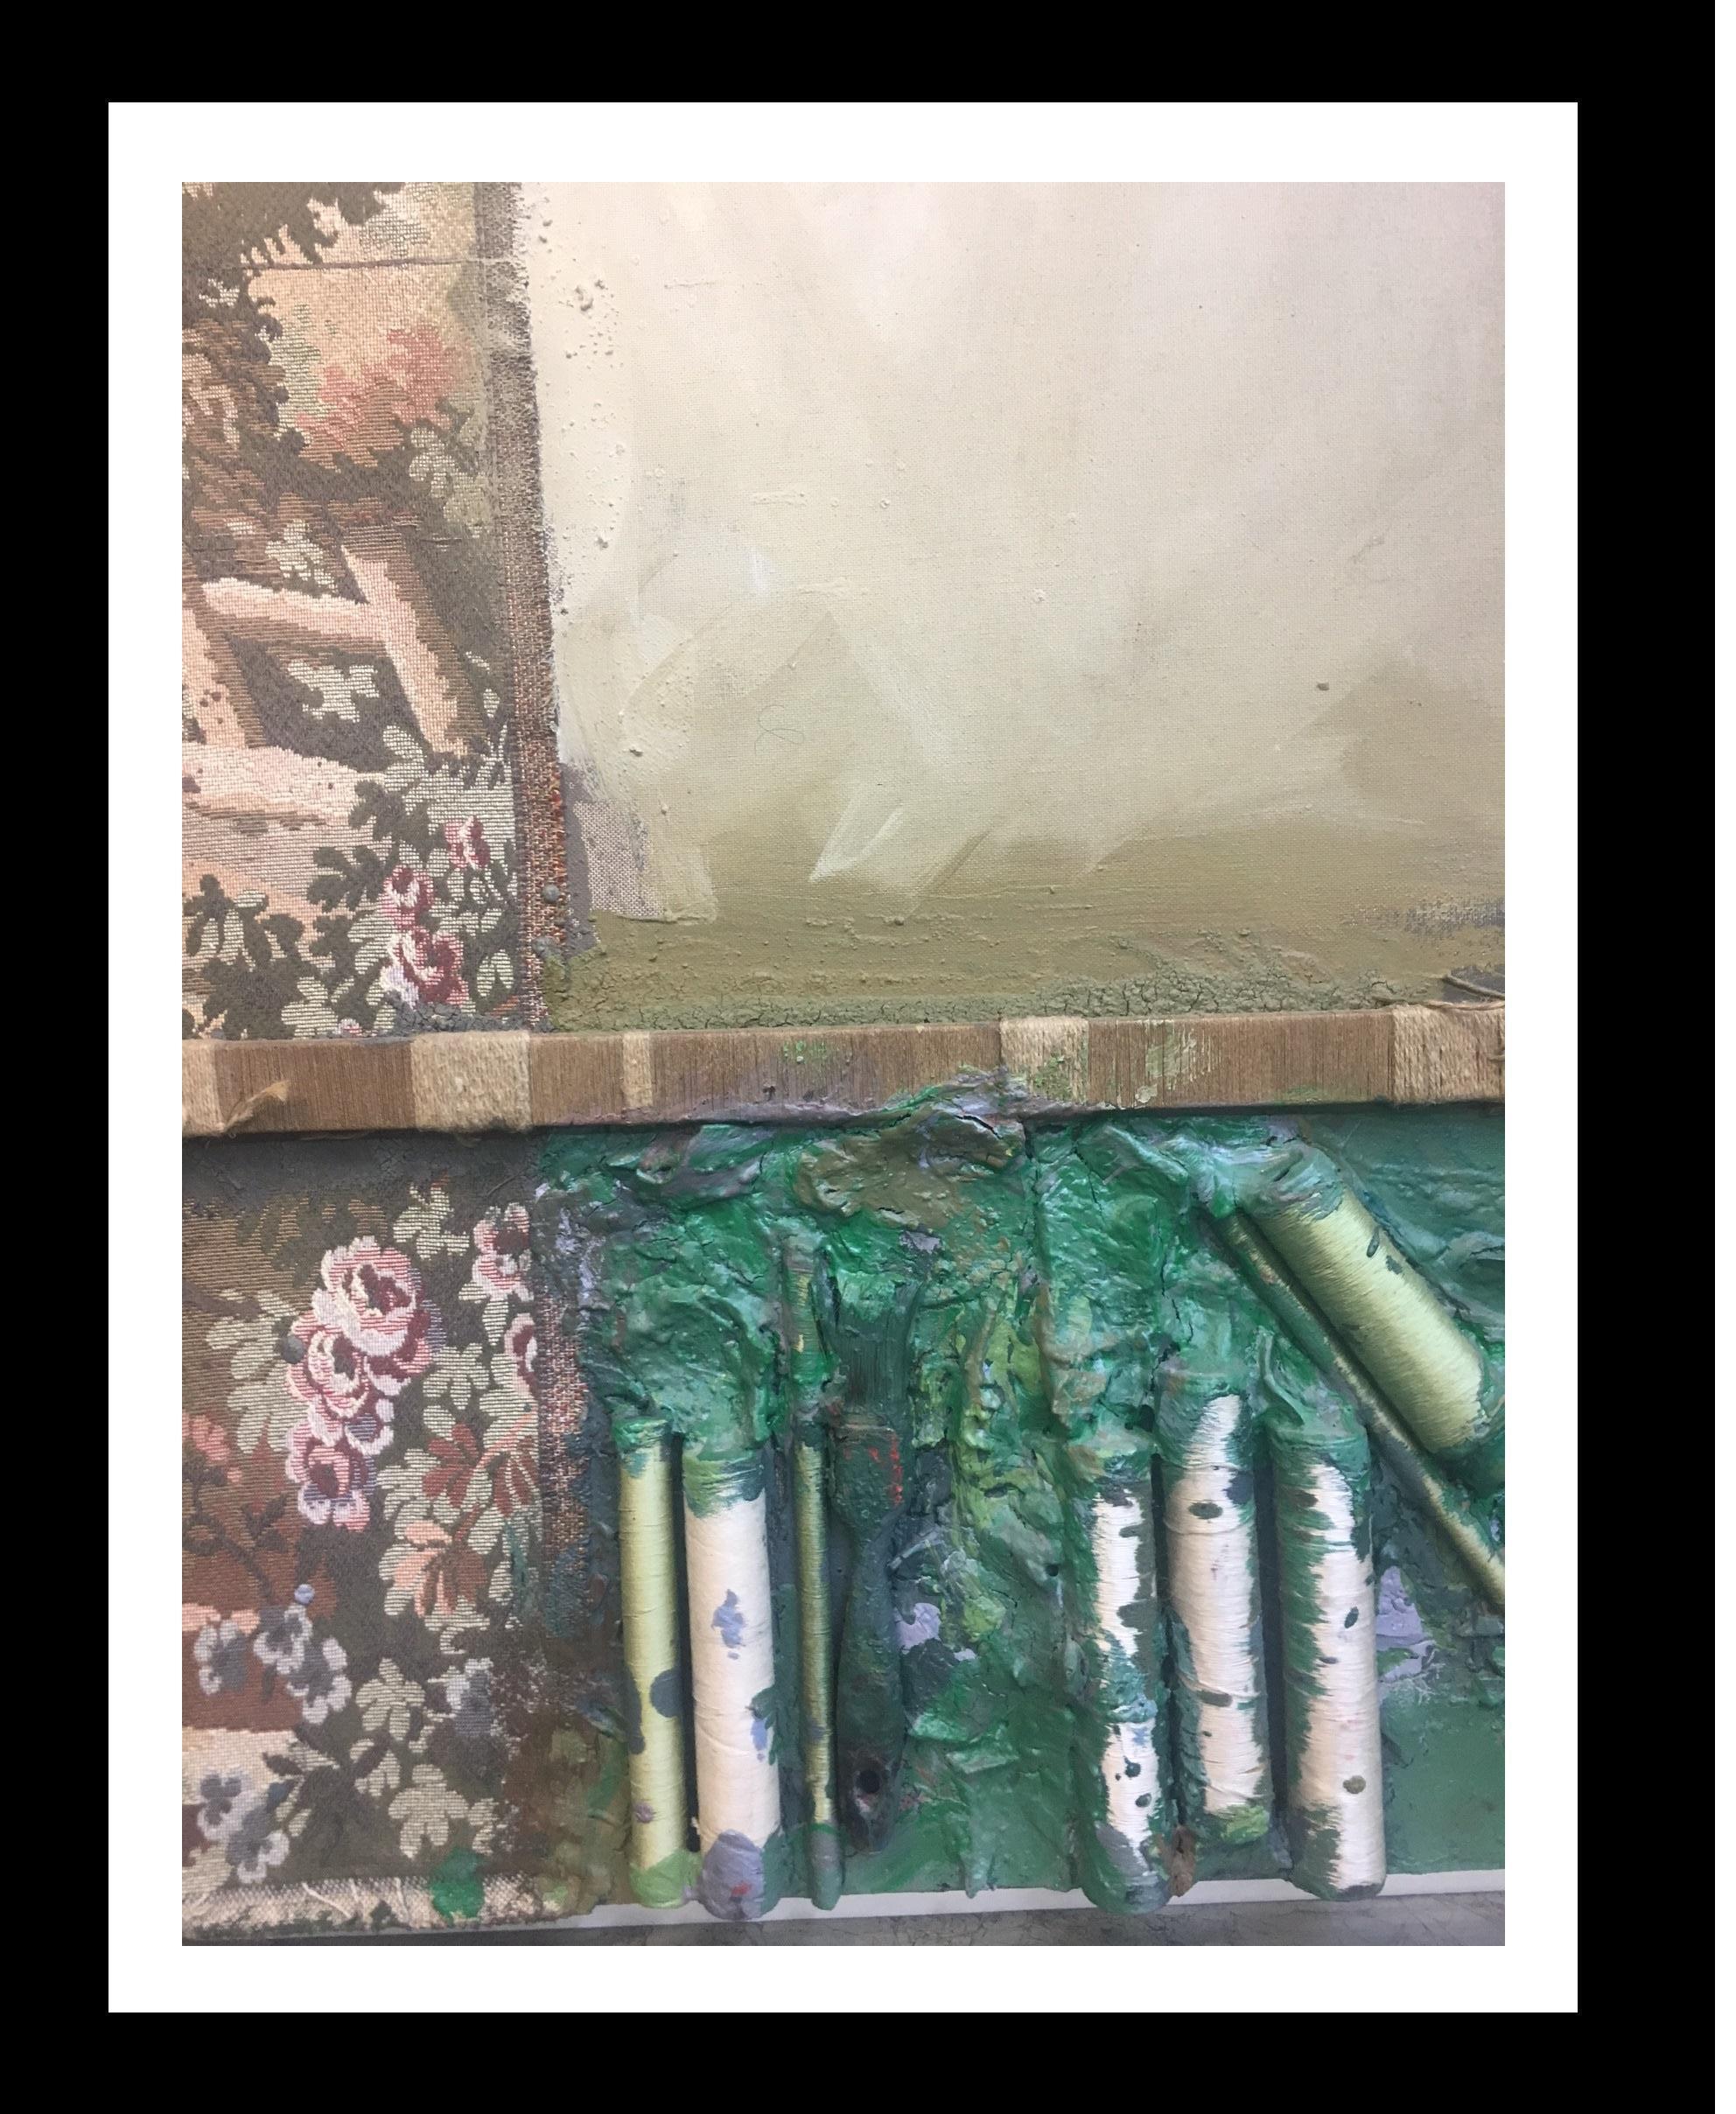  Grau Garriga   Textile  Thread Spools  Green  Ocher  Collage. abstract 